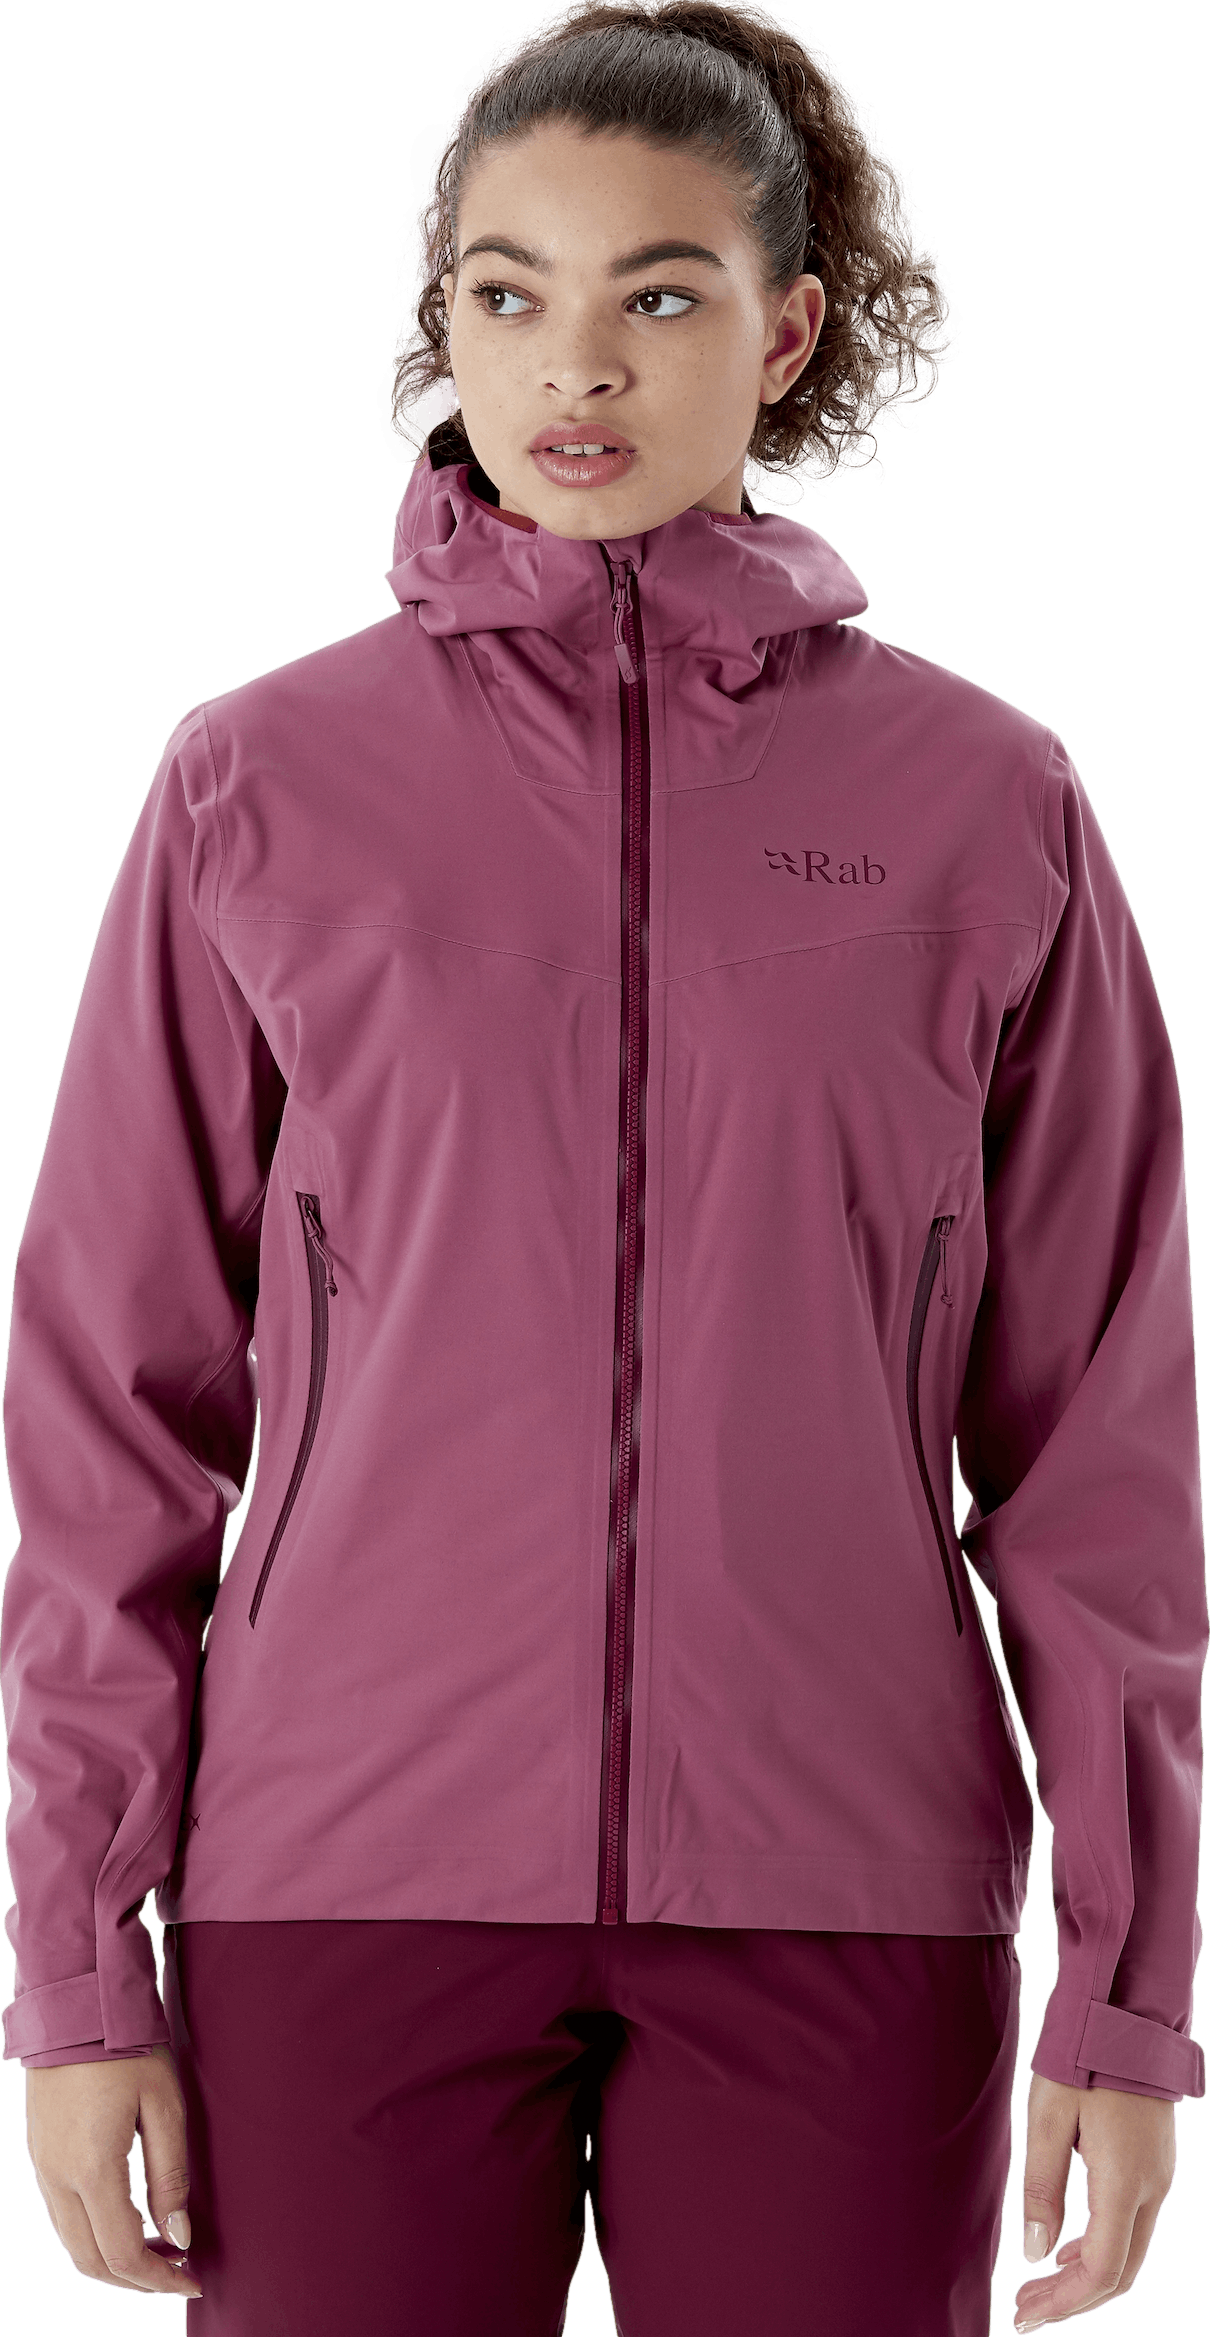 Rab Women's Kinetic 2.0 Waterproof Jacket